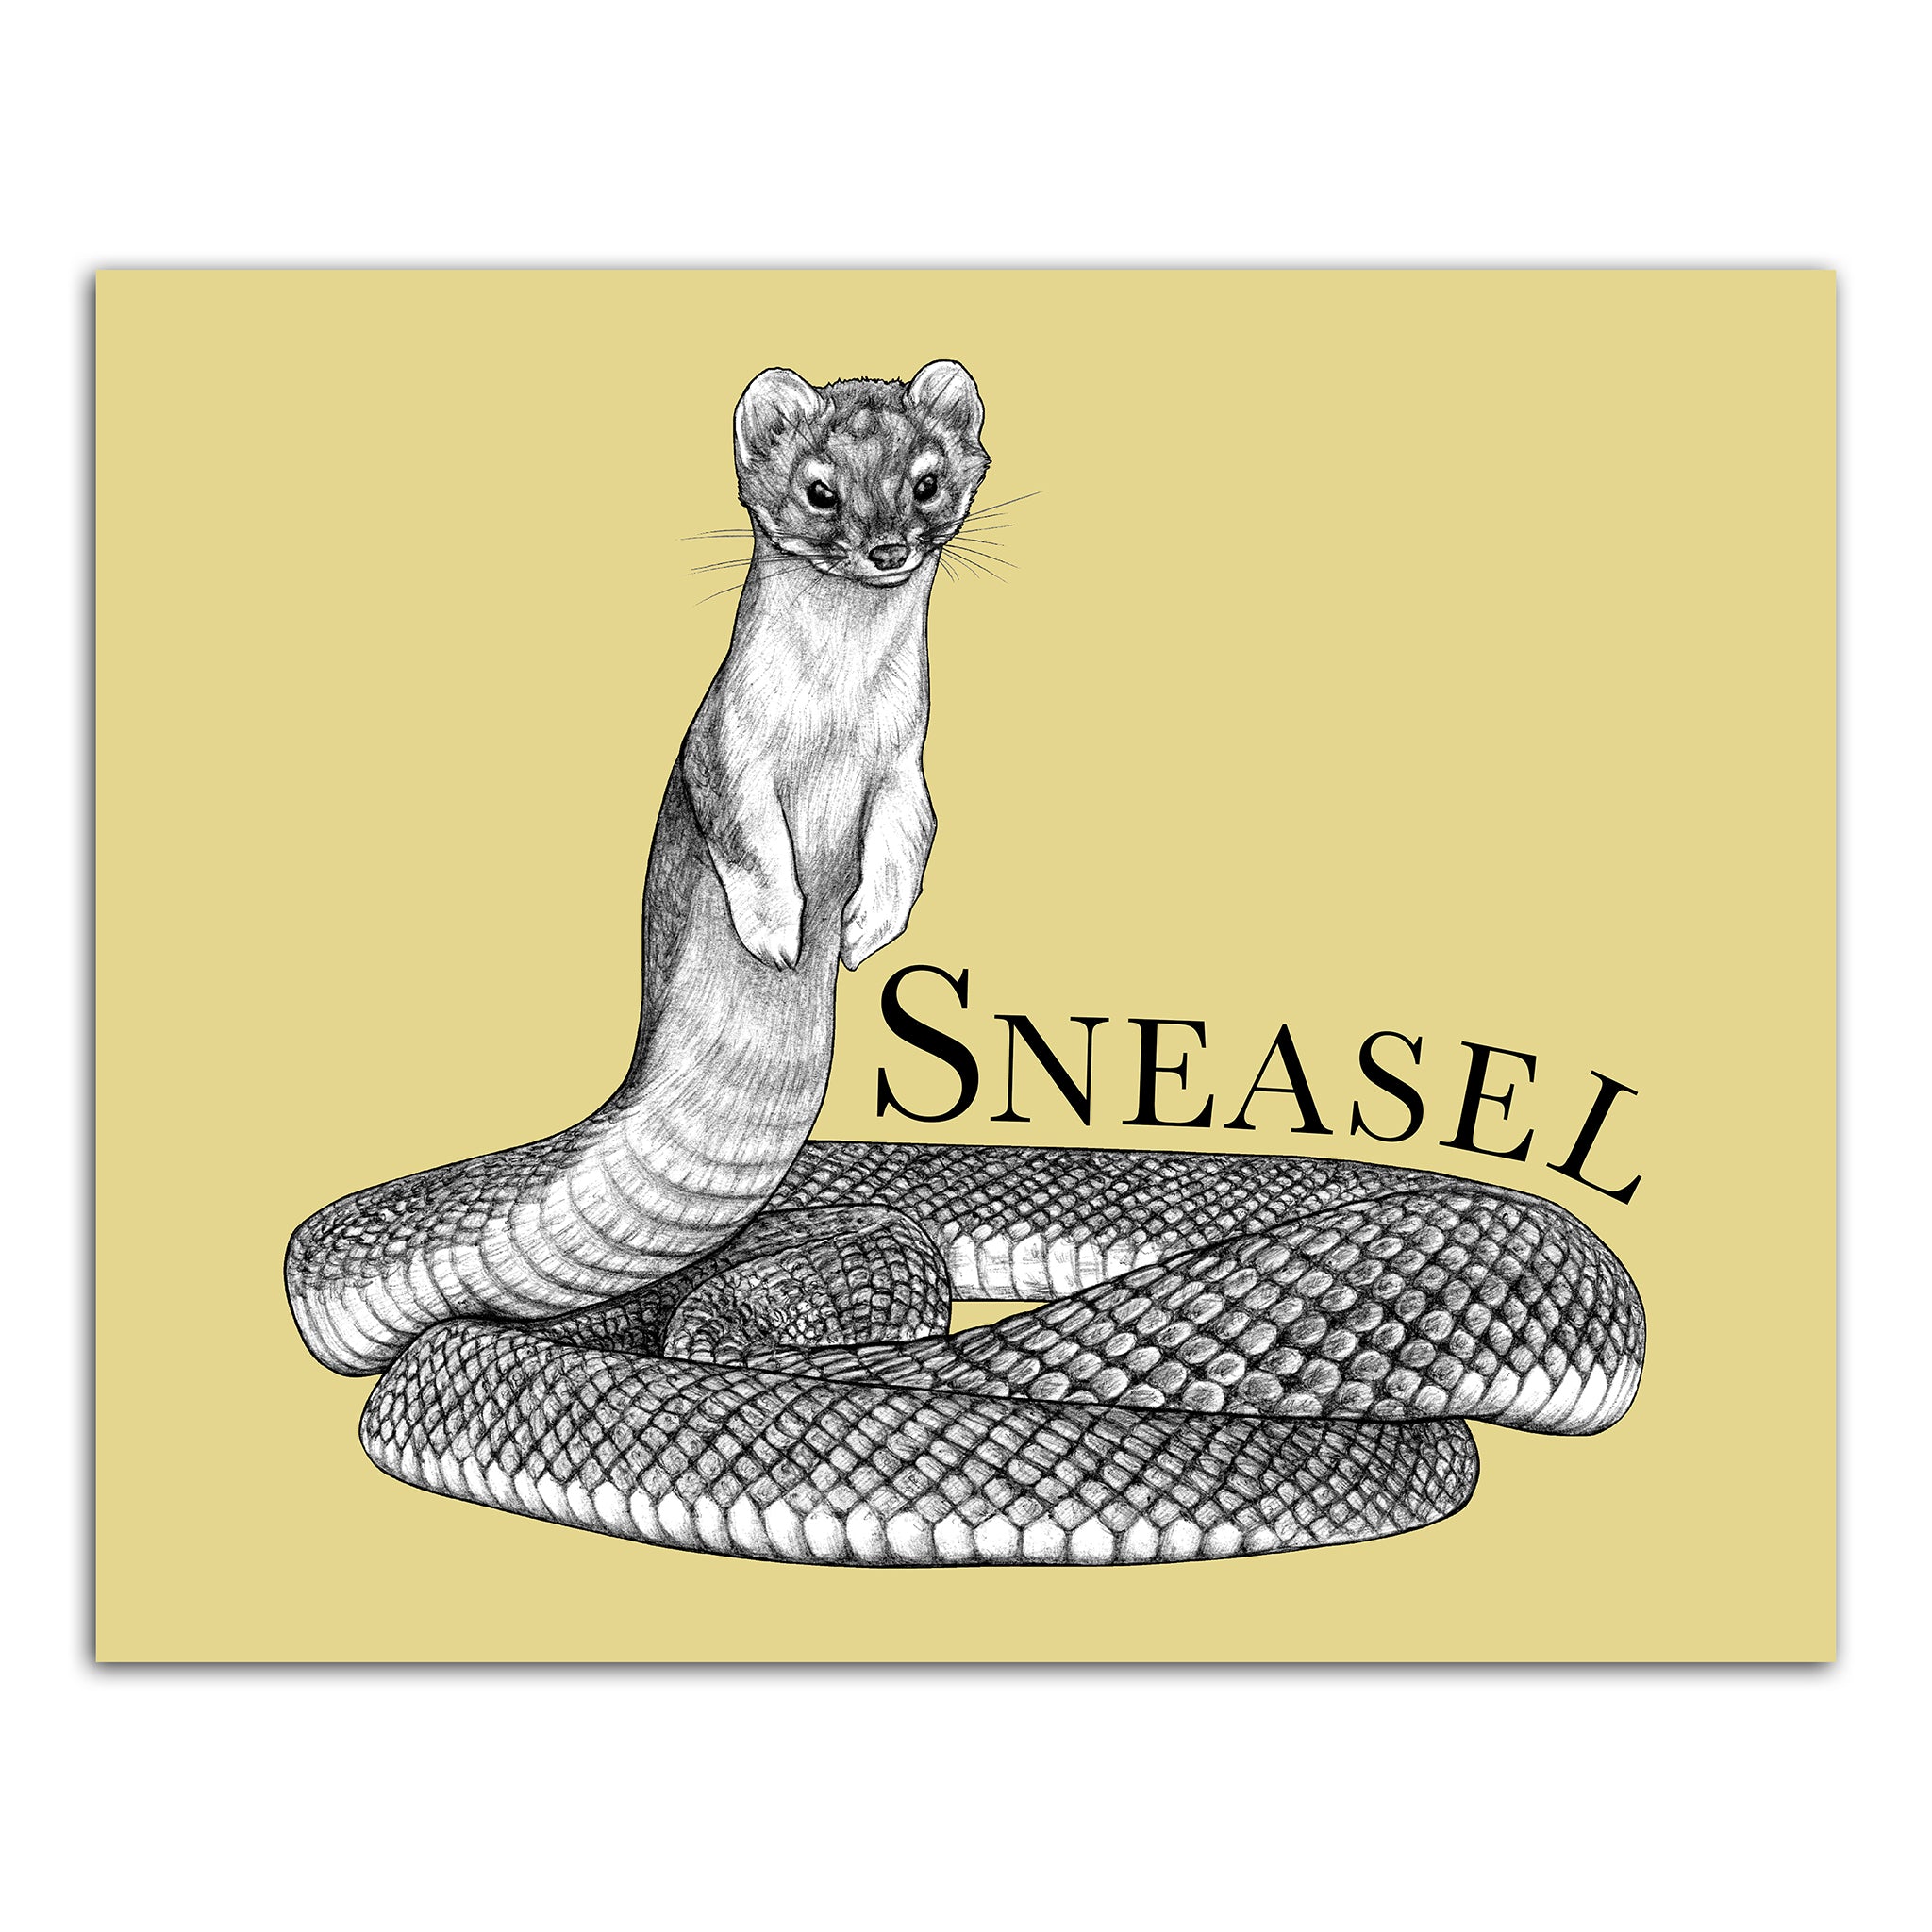 Sneasel | Snake + Weasel Hybrid Animal | 8x10" Color Print